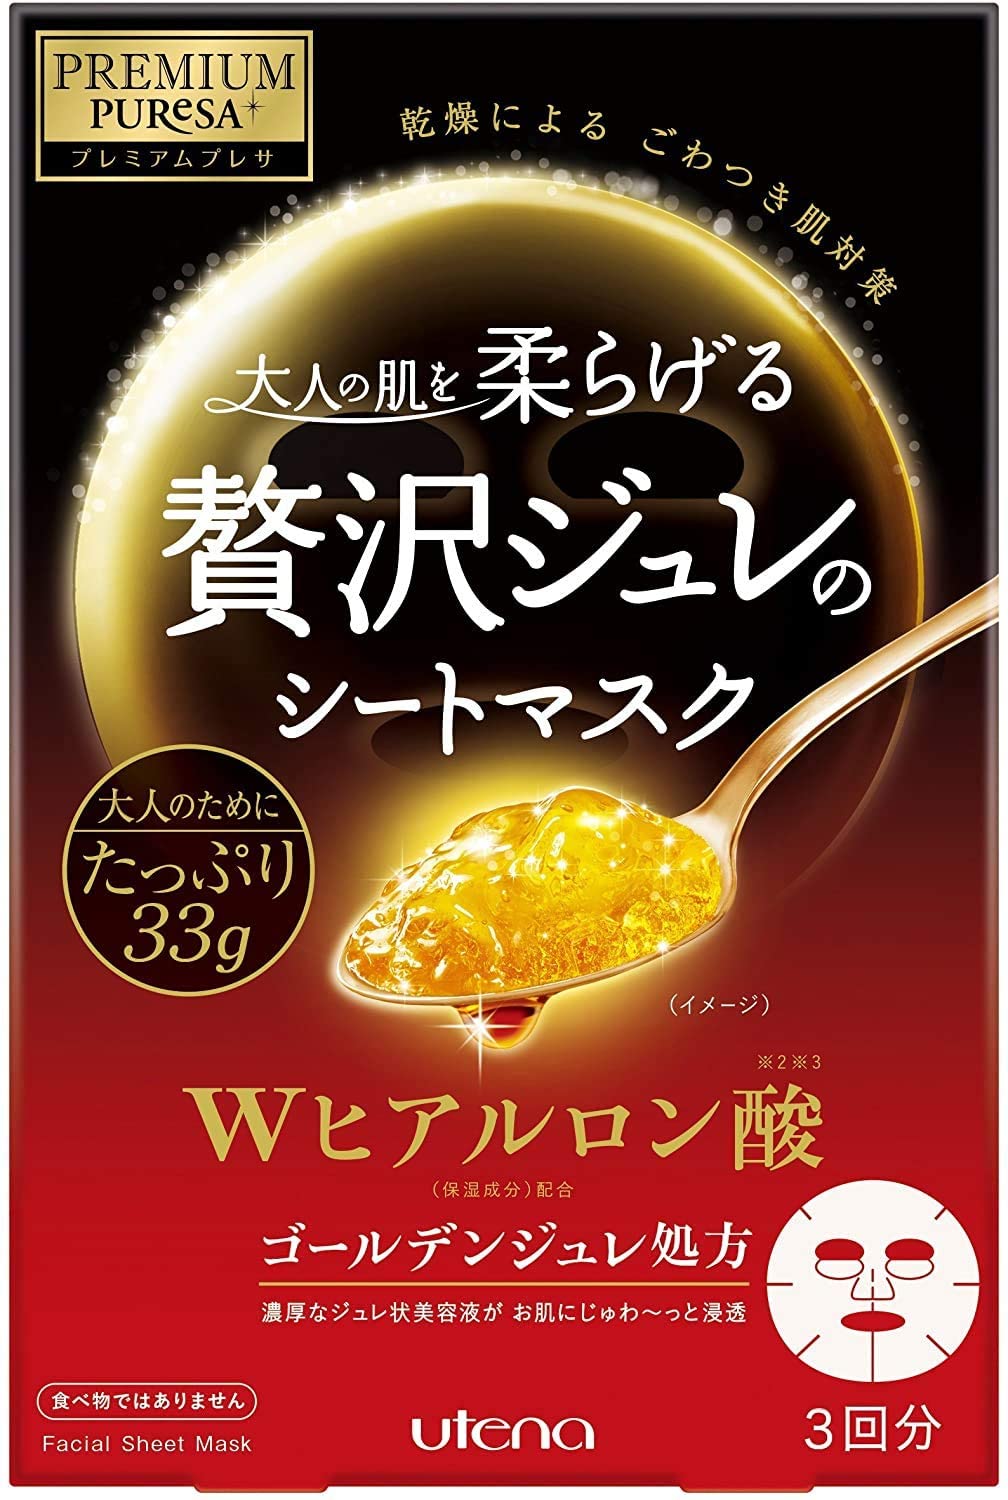 PREMIUM PUReSA Golden Jelly Mask 33g*3sheets (4types)